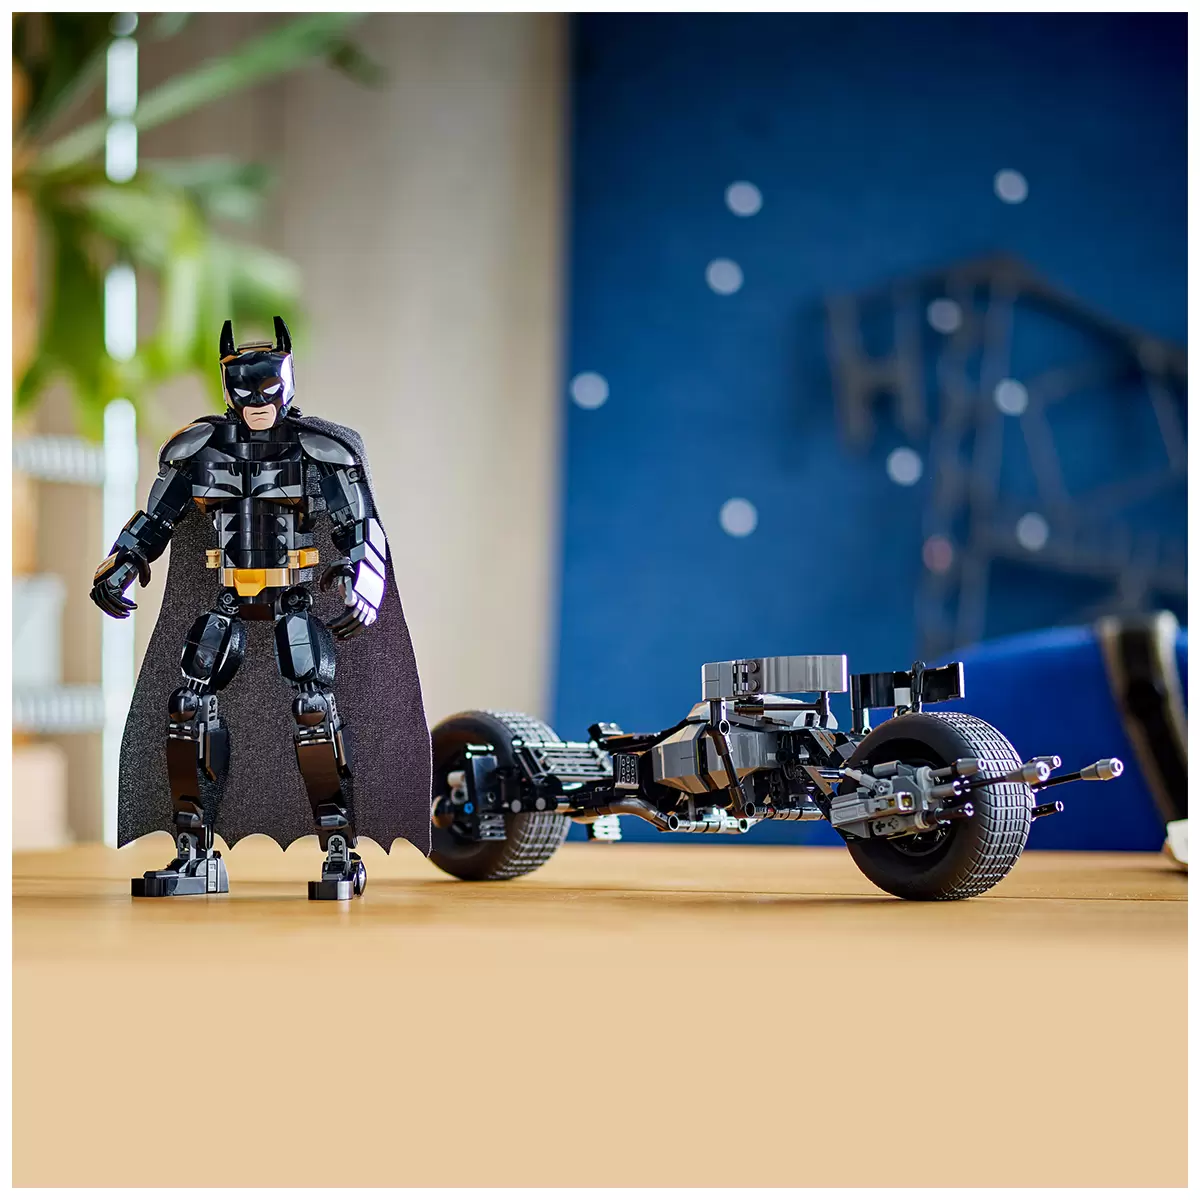 LEGO Super Heroes DC Batman Construction Figure And The Bat-Pod Bike 76273